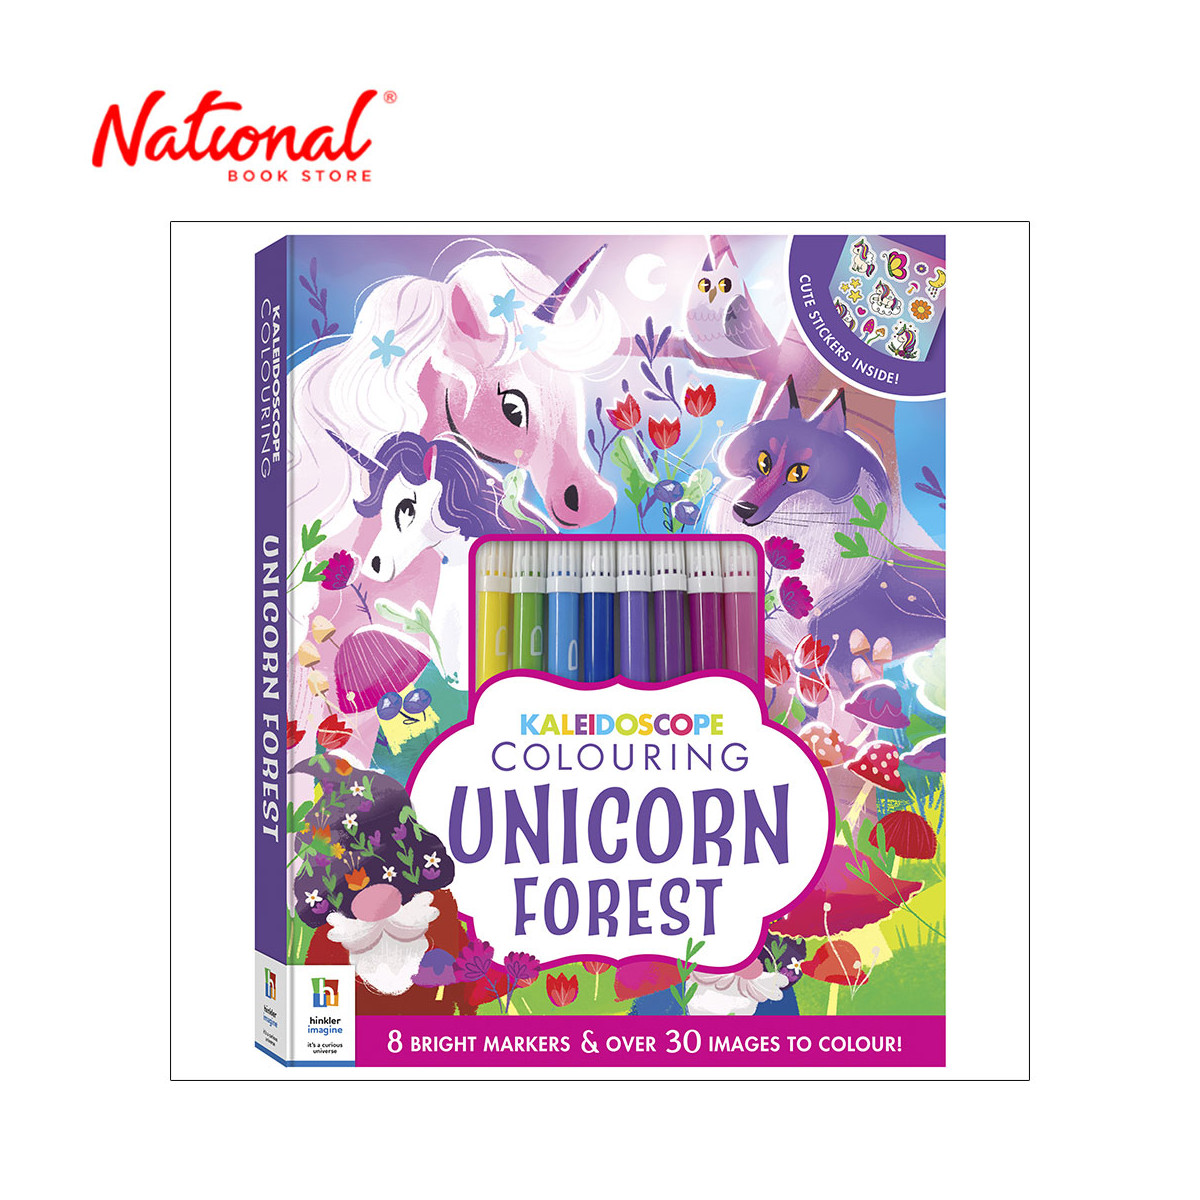 Kaleidoscope Colouring Kit: Unicorn Forest - Trade Paperback - Activity Books for Kids